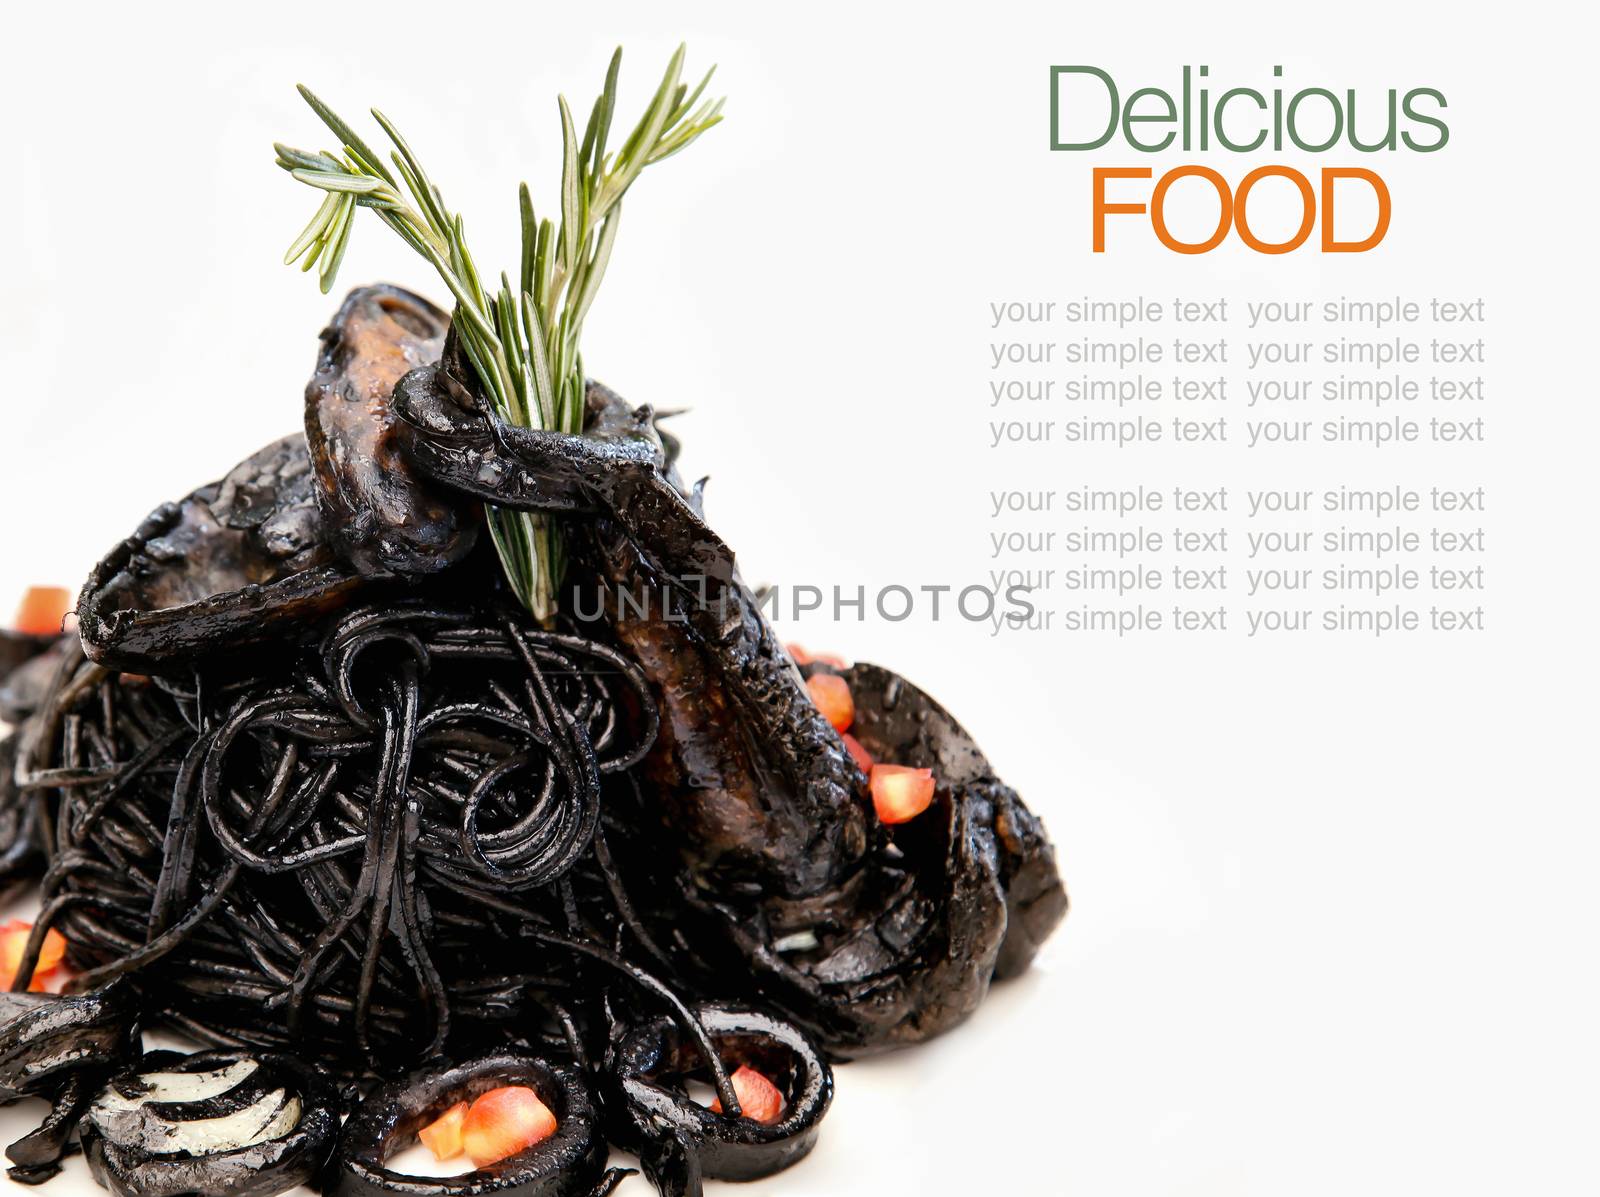 Italian cuisine squid ink spaghetti and seafood.